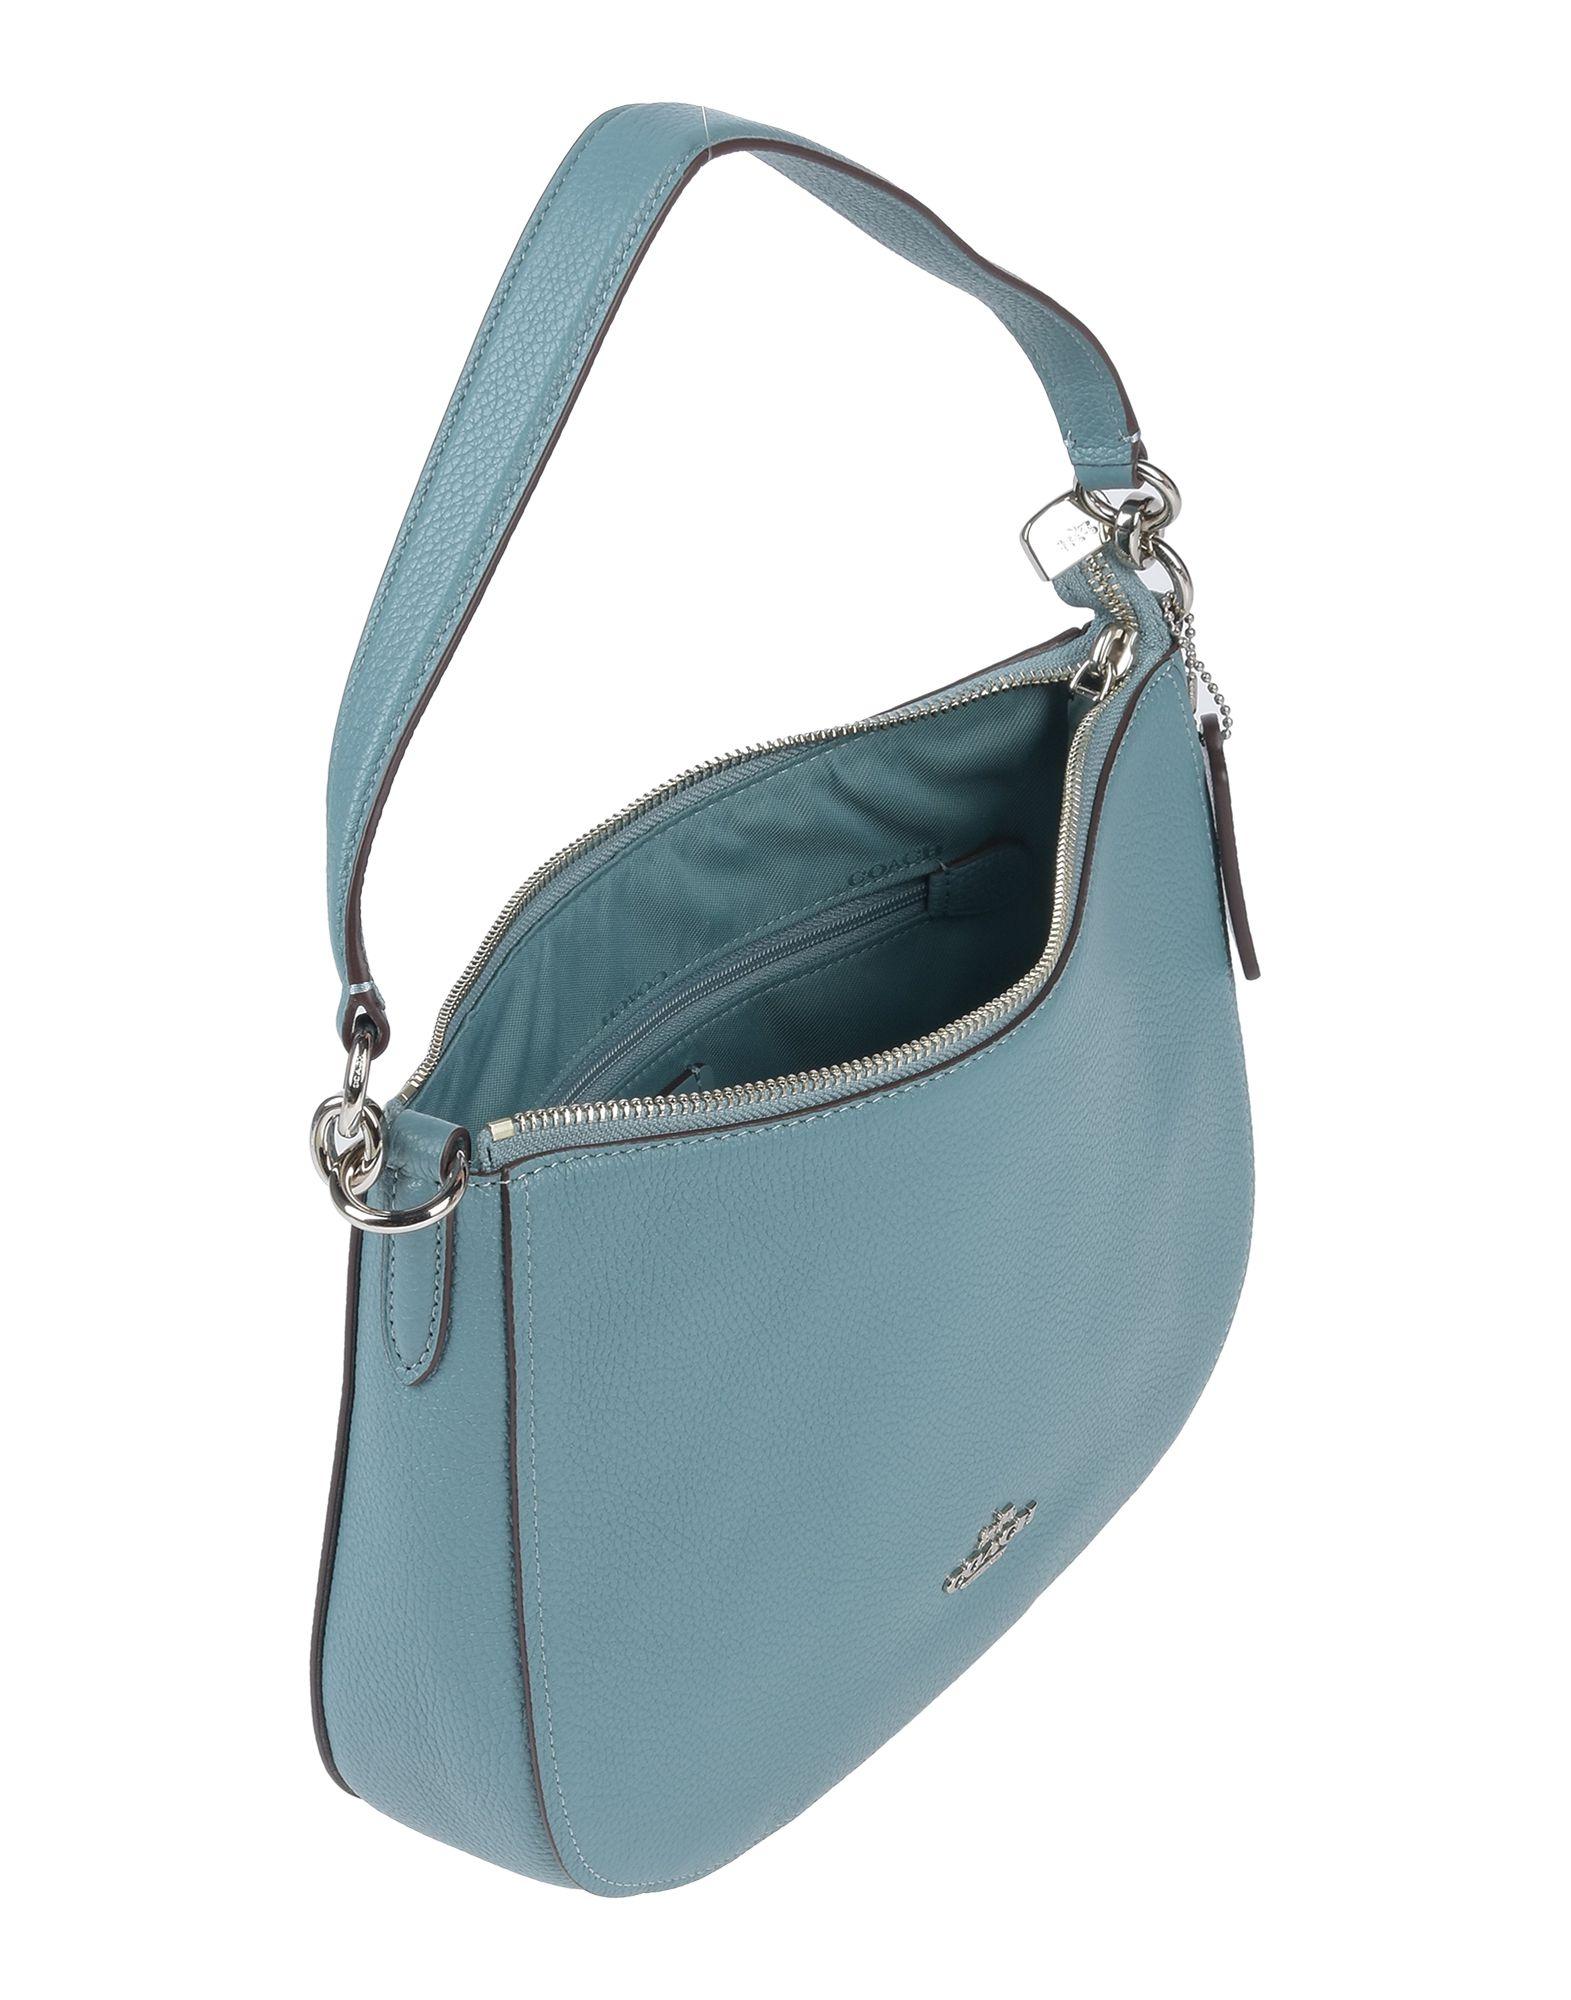 LUXUCA.COM - Coach Powder Blue Leather Two-Way Tote & Shoulder Bag